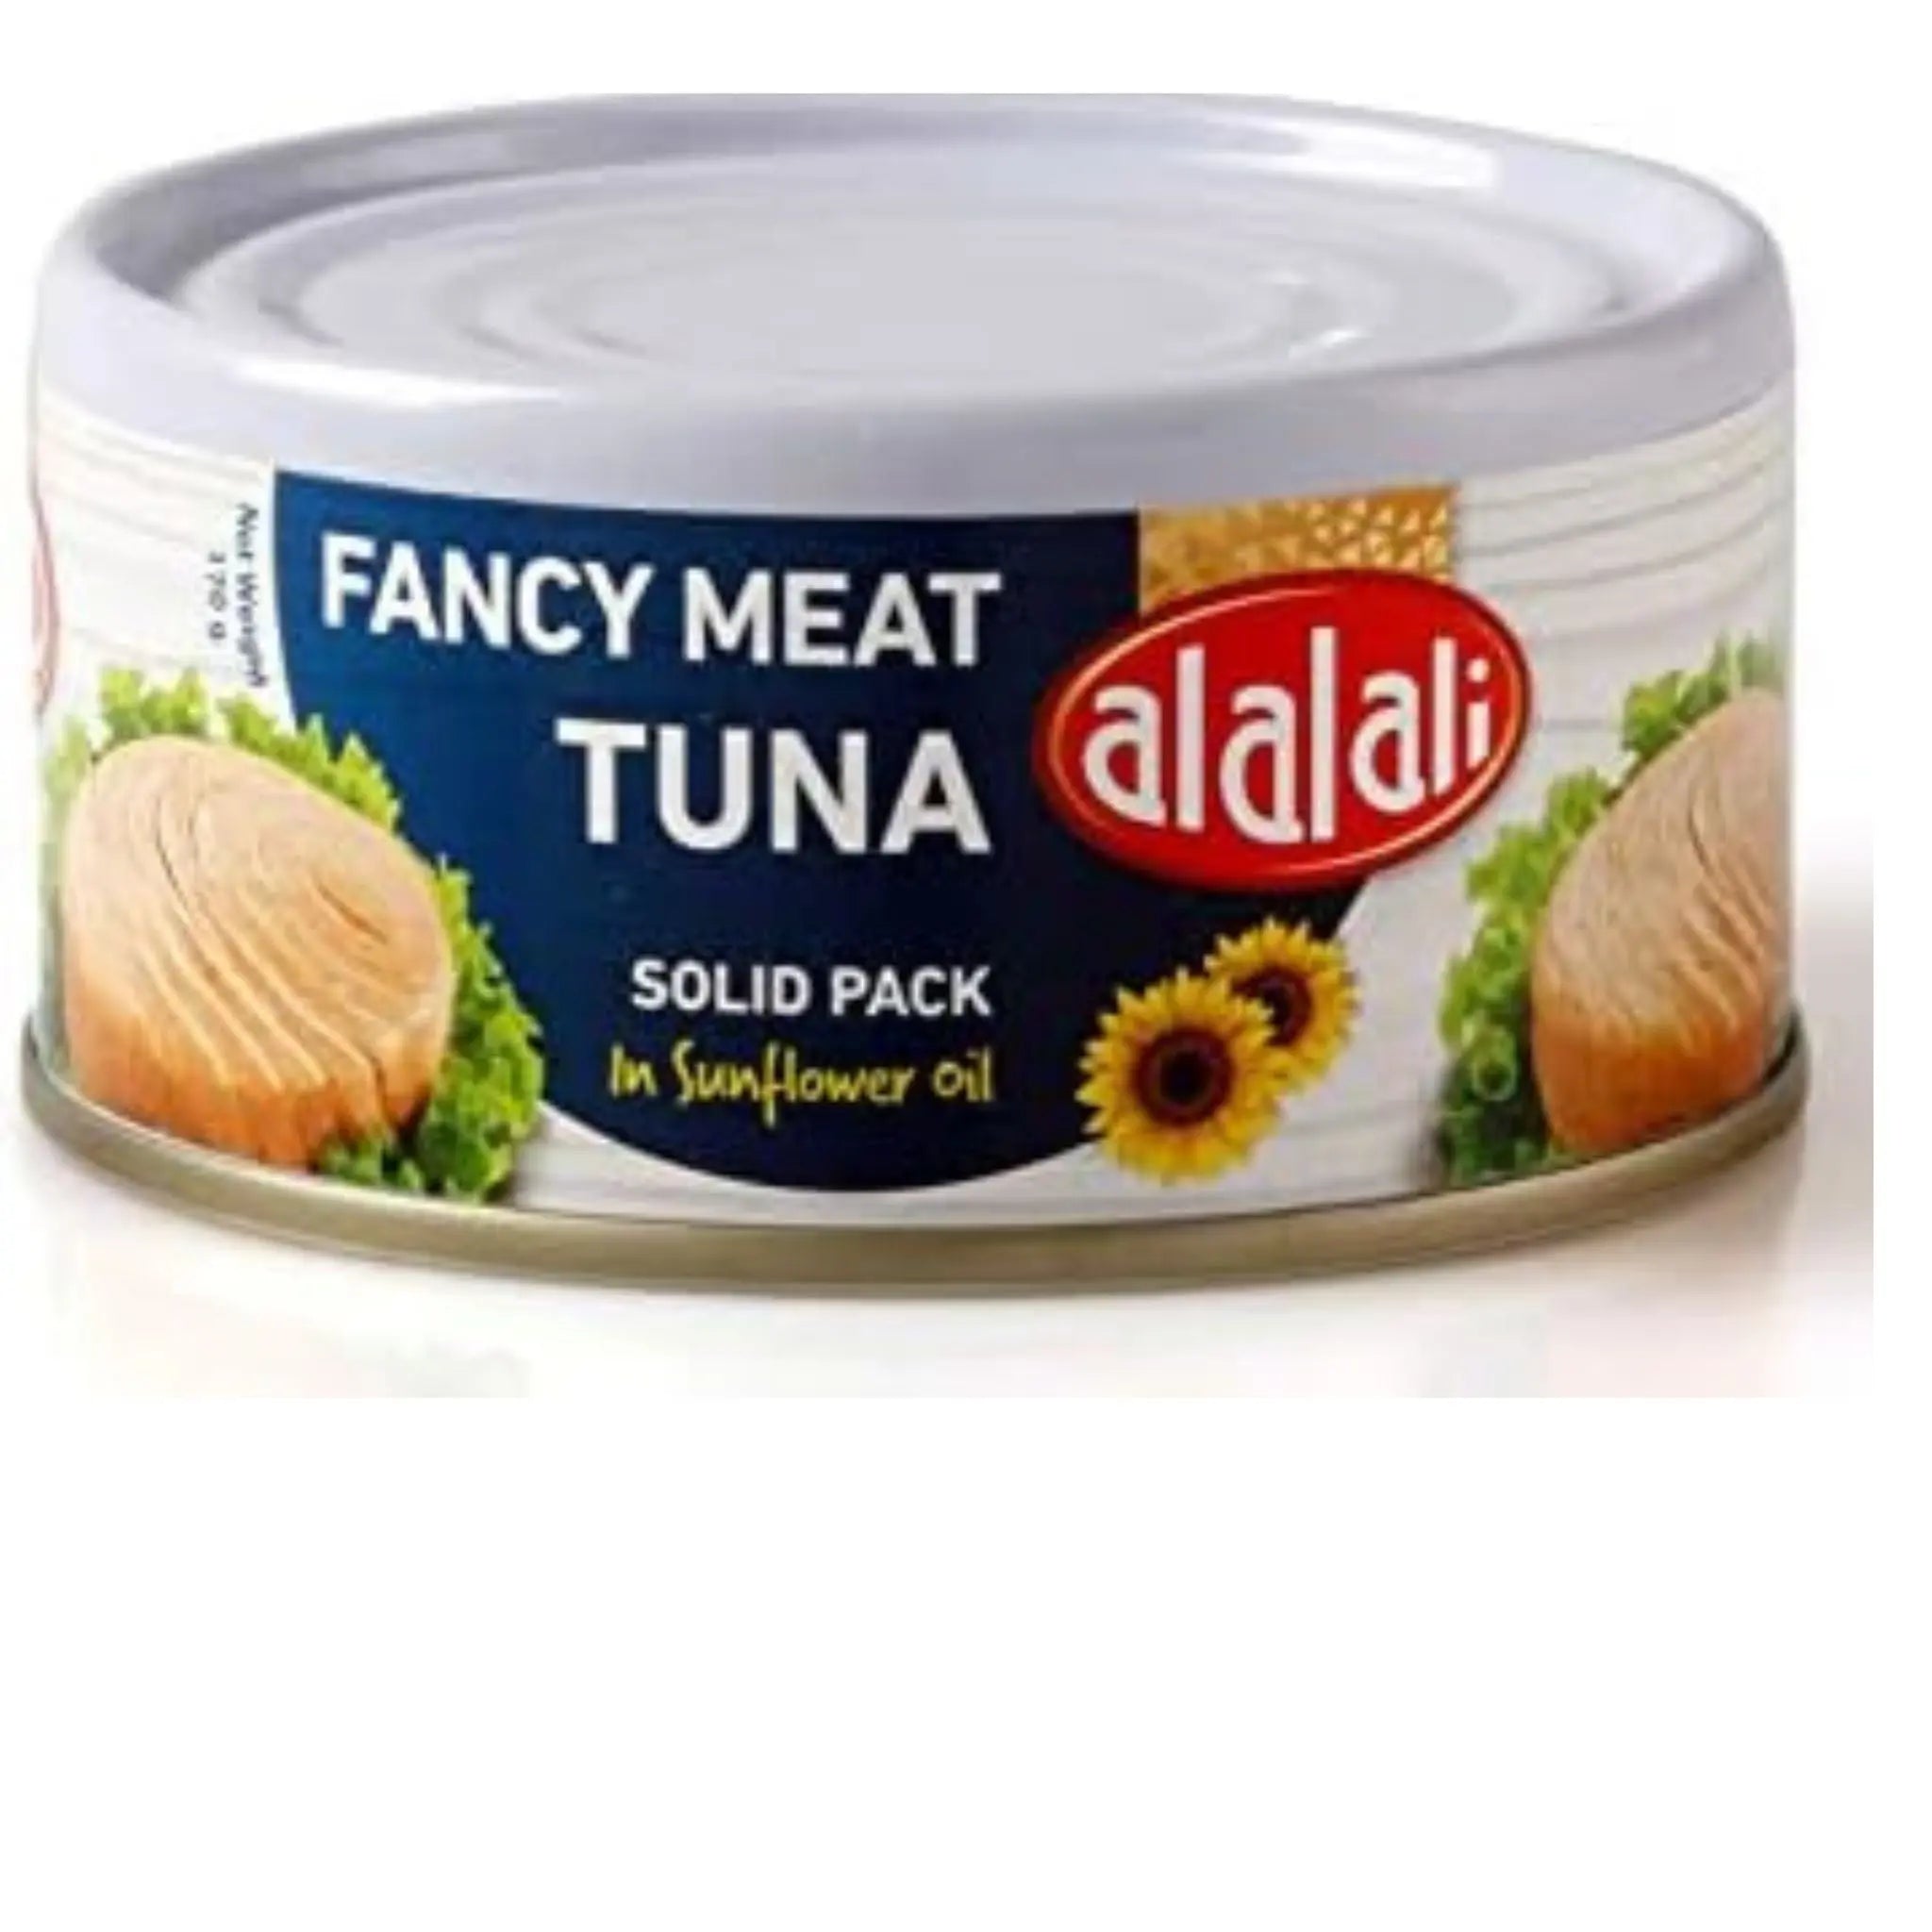 Alalali fancy meat tuna (in sunflower oil) - 48x170g (1 Carton) - Marino.AE